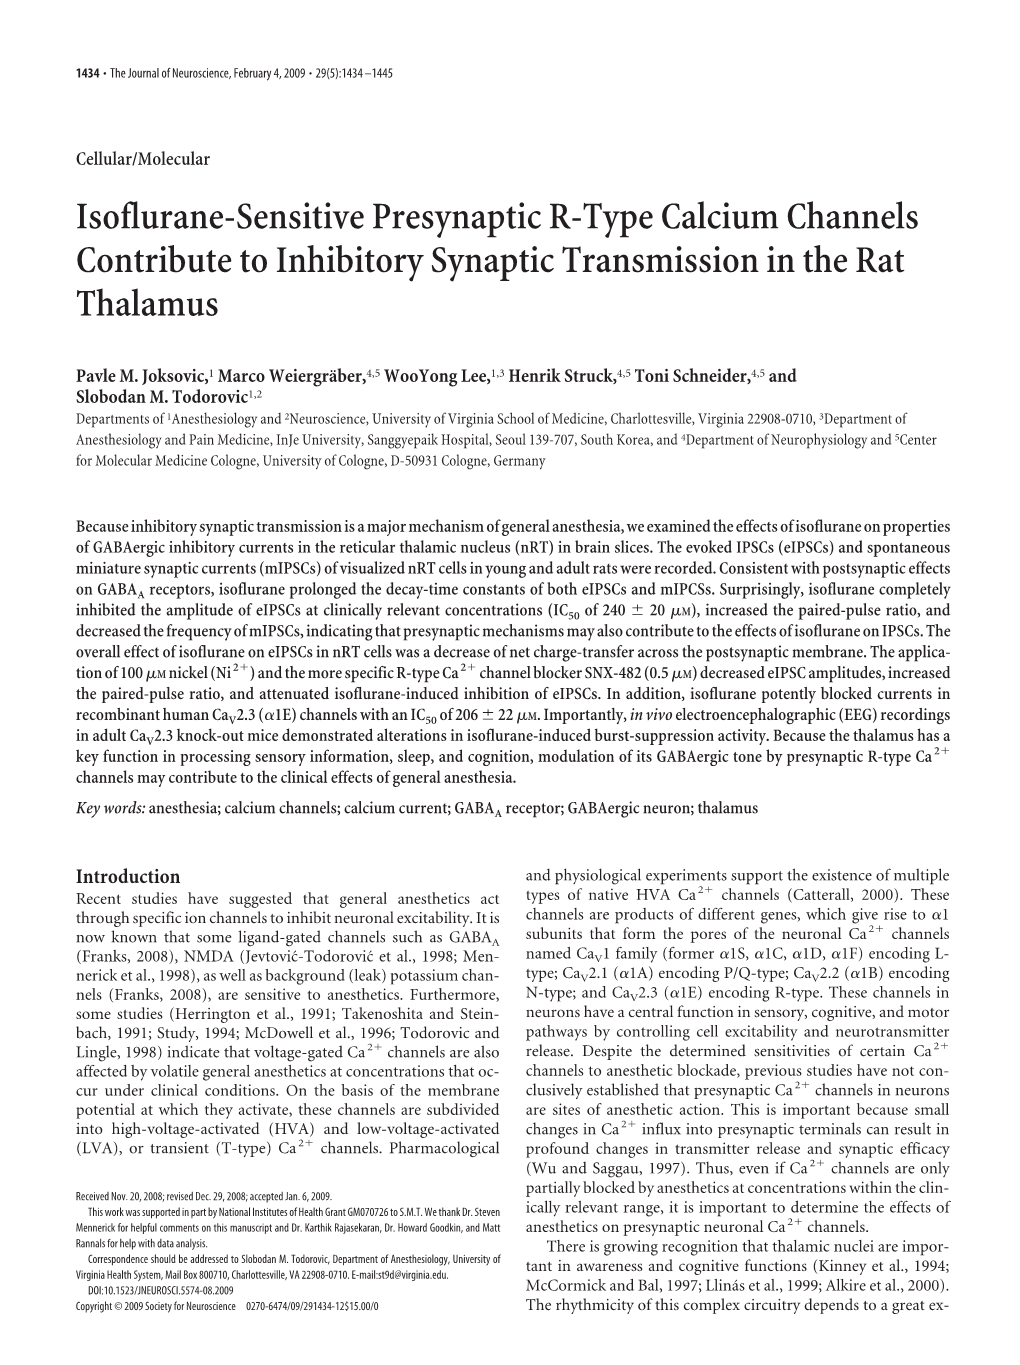 Isoflurane-Sensitive Presynaptic R-Type Calcium Channels Contribute to Inhibitory Synaptic Transmission in the Rat Thalamus